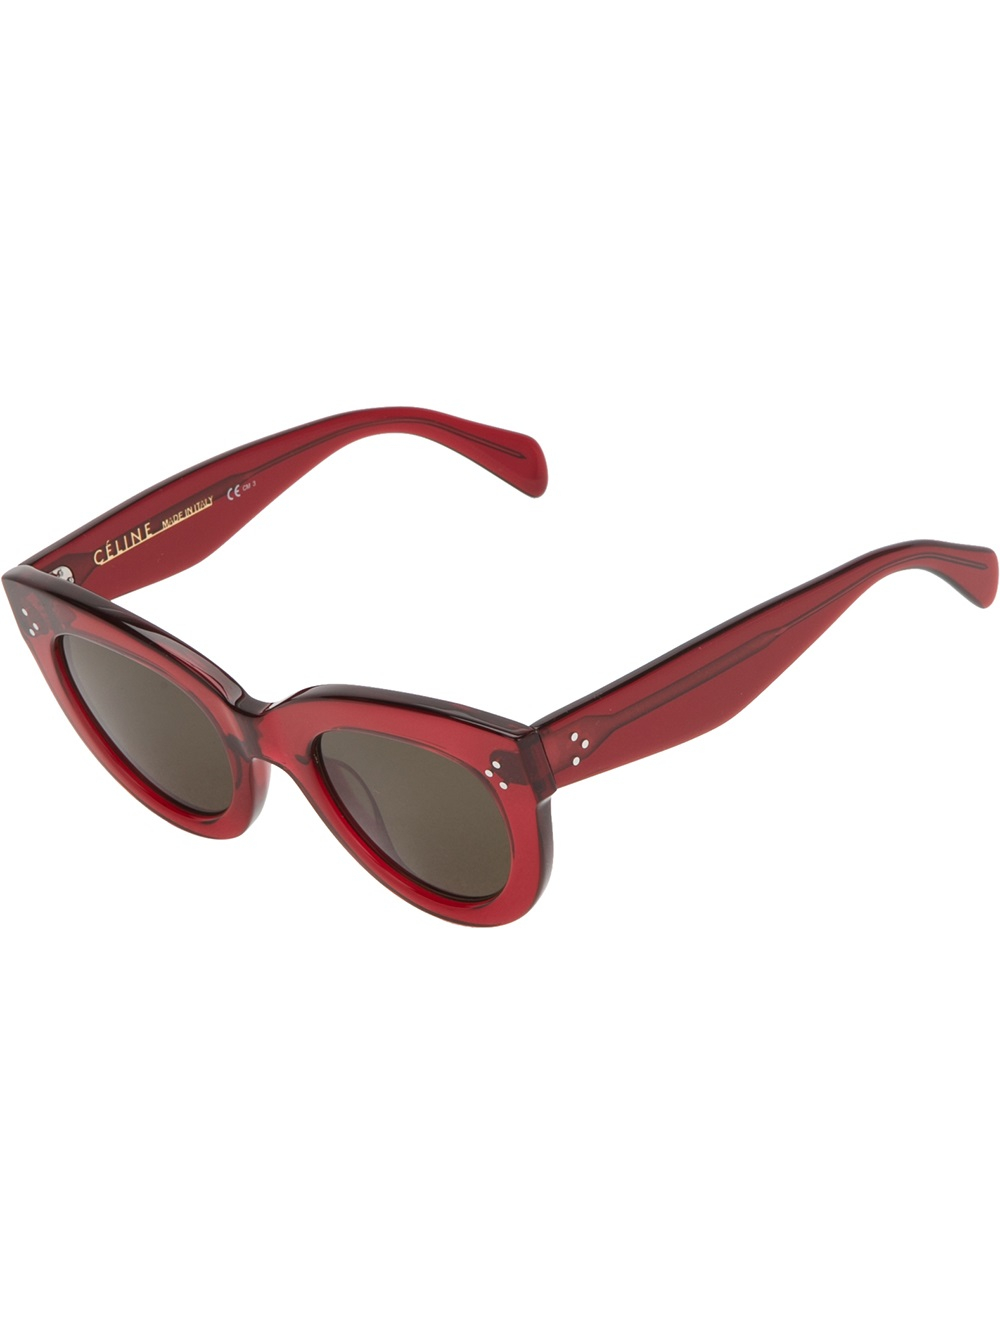 Celine Cats Eye Sunglasses in Red - Lyst